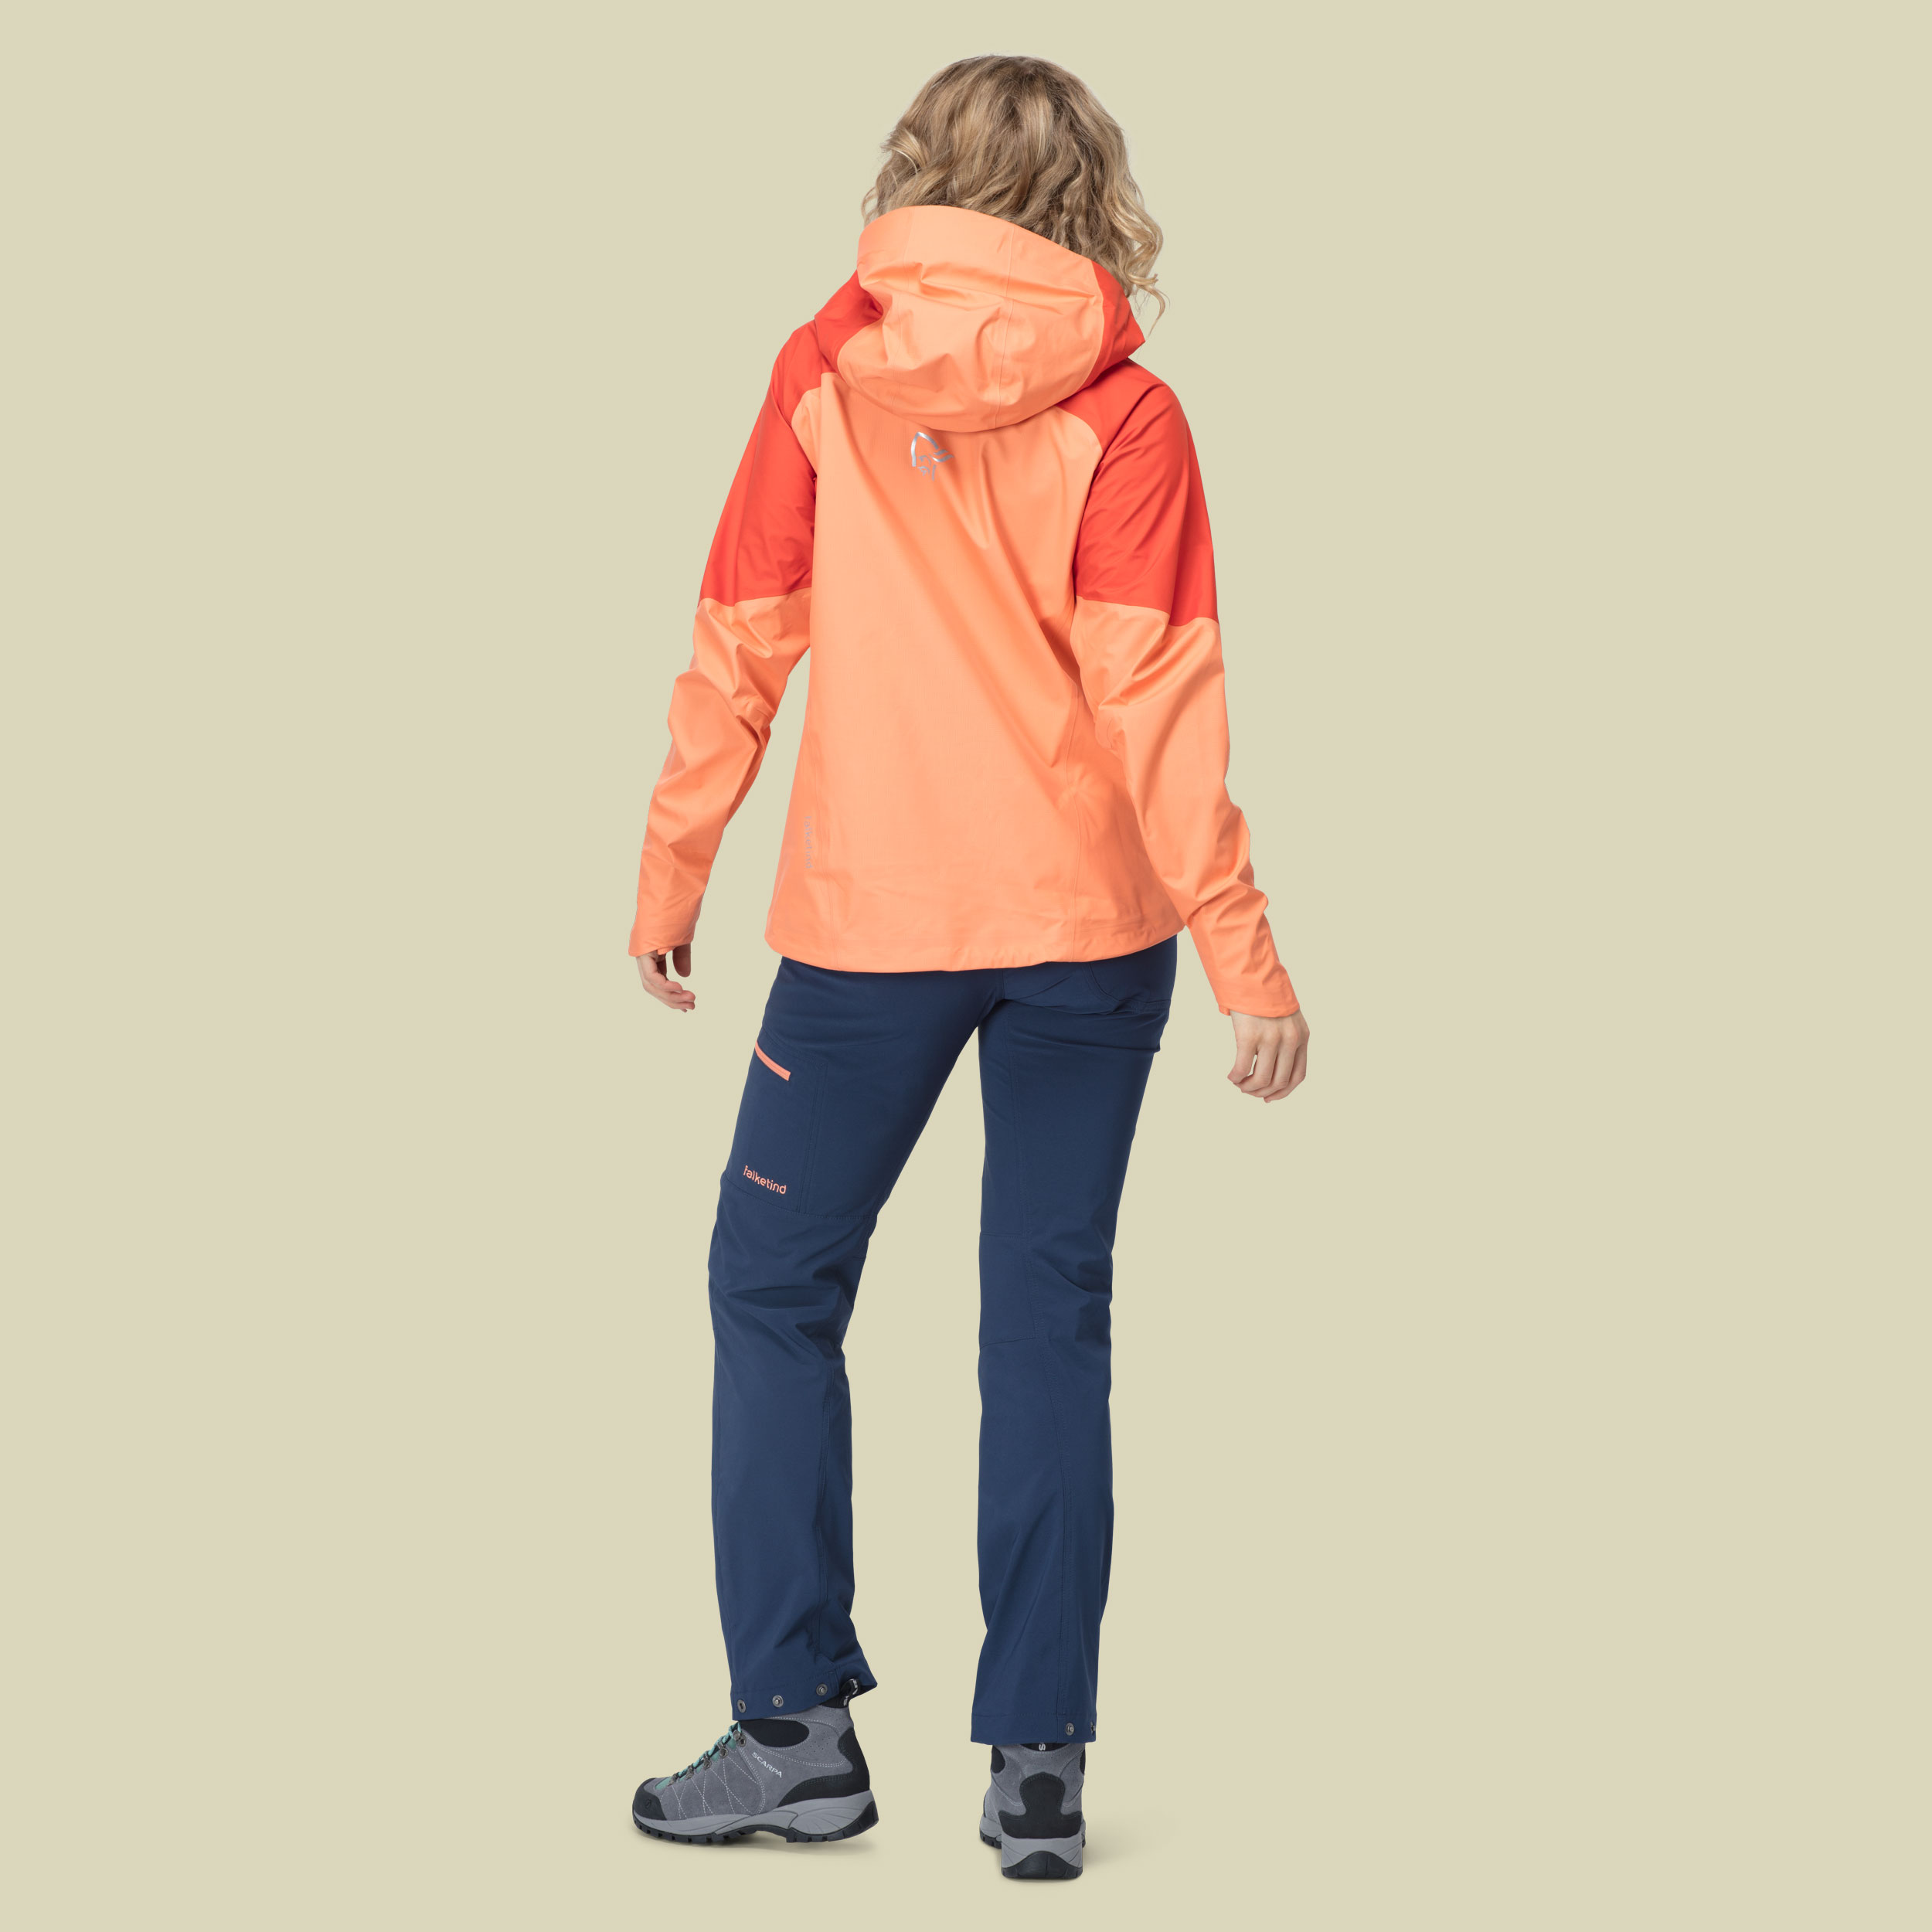 Falketind Gore-Tex Jacket Women Größe L  Farbe melon